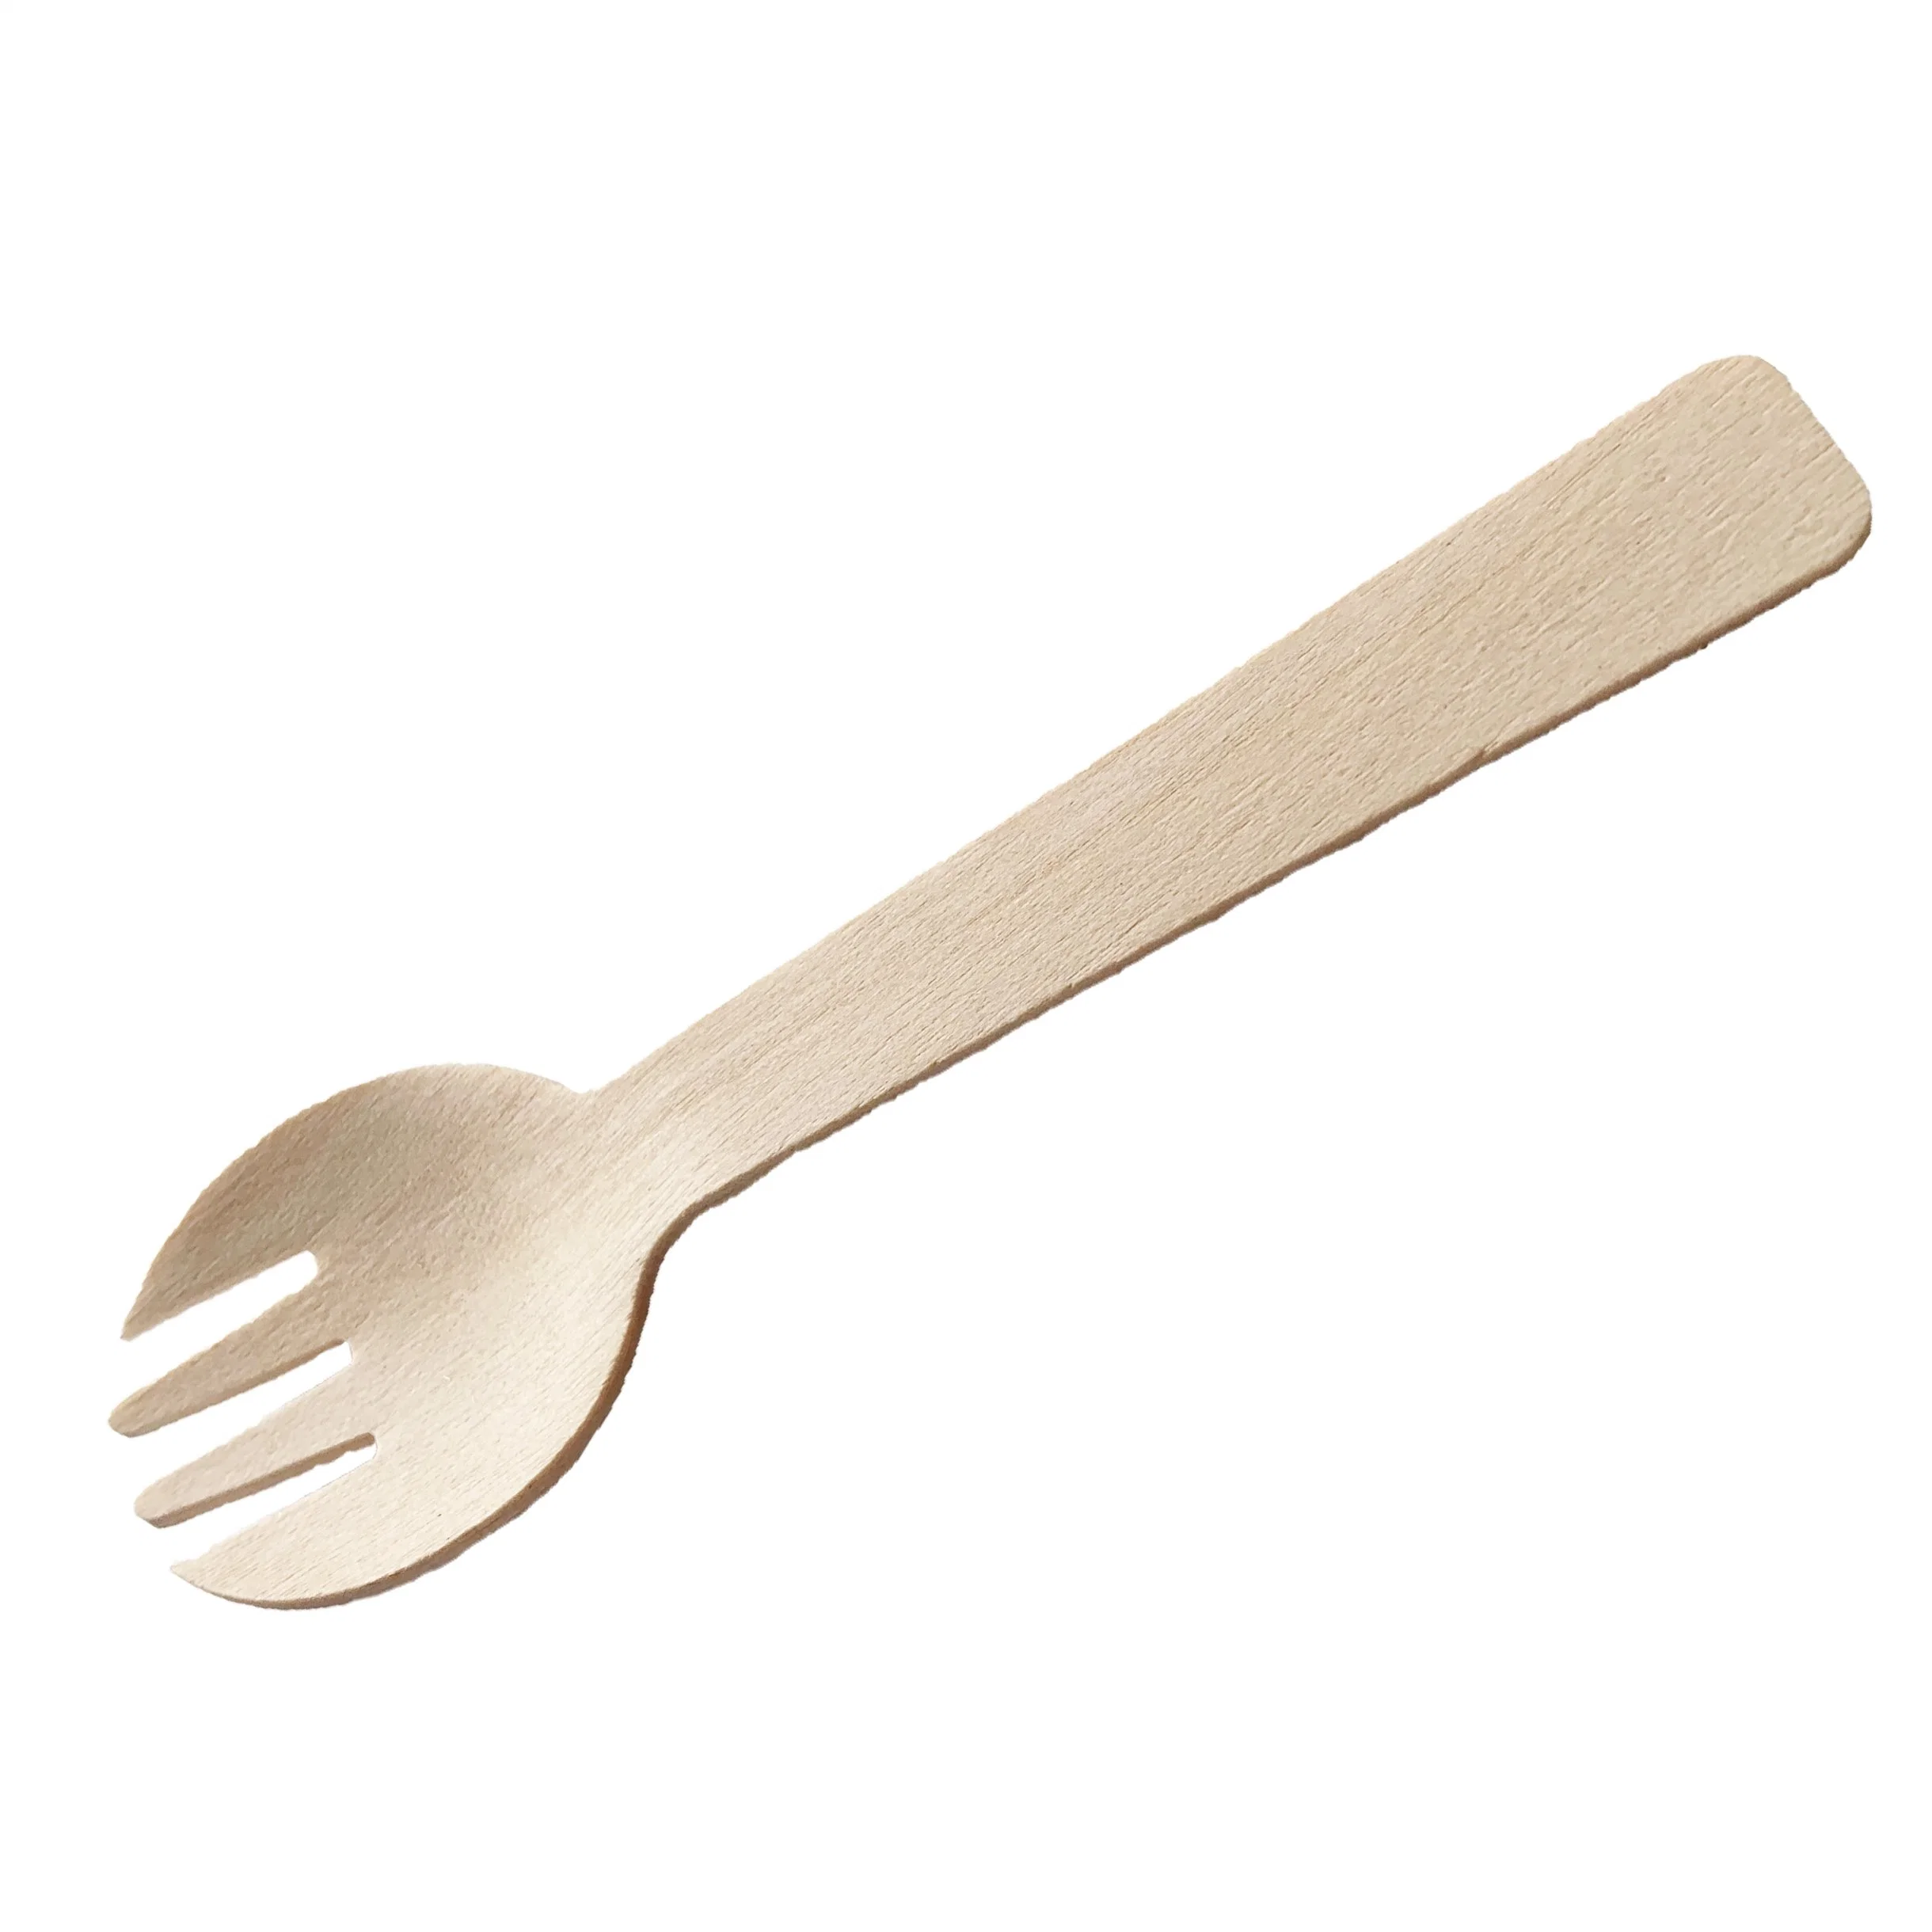 Flatware Sets Tableware Sets Wooden Spoon Fork Knife Wooden Cutlery for Restaurant